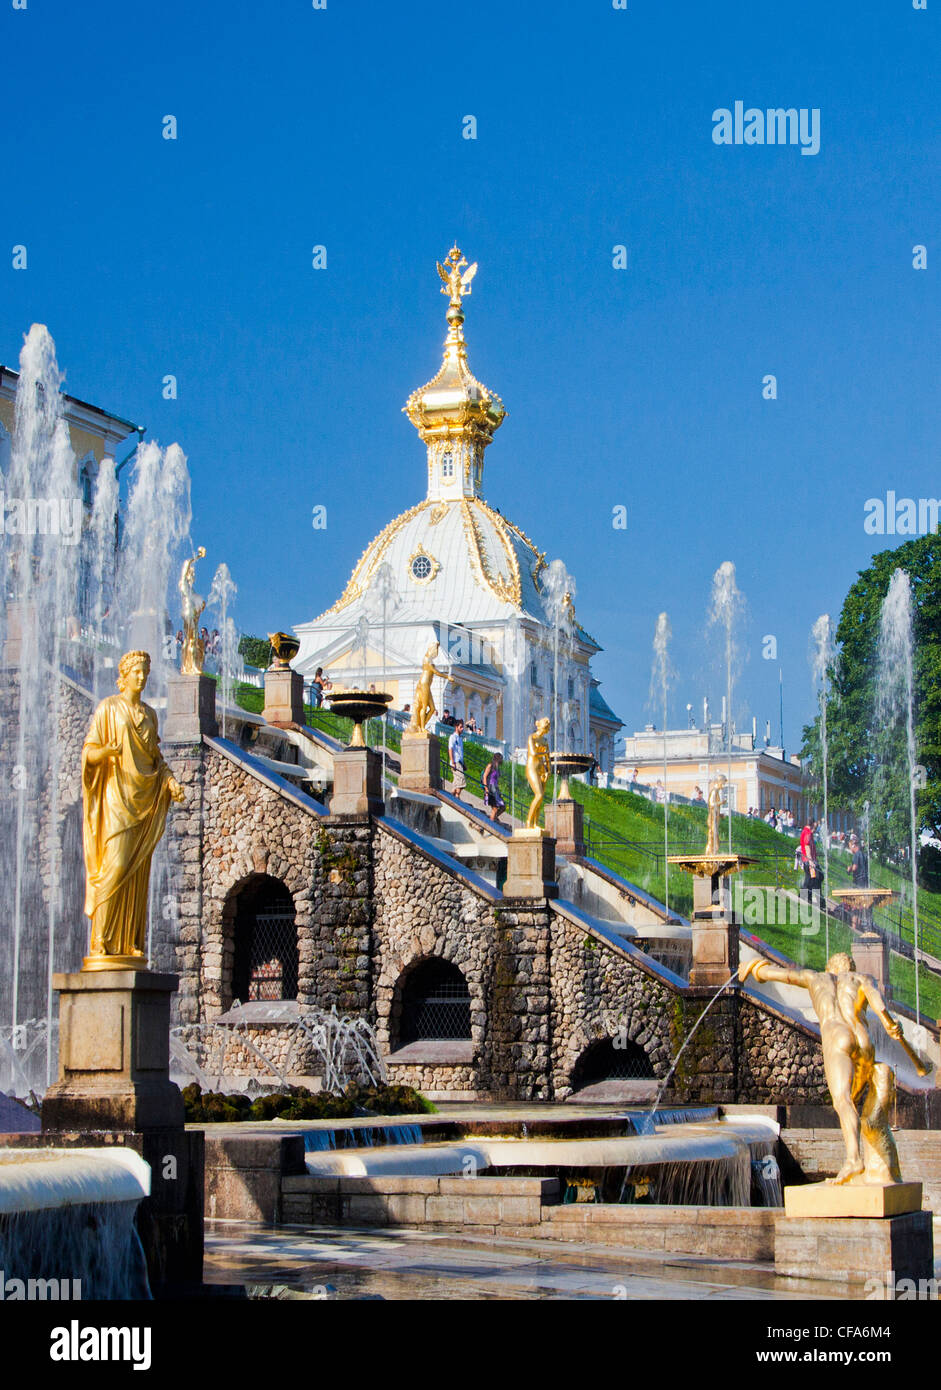 Russia, Europa, San Pietroburgo, Peterburg, città di Peterhof Palace, il Summer Palace, patrimonio mondiale, parco, fontana, statue Foto Stock